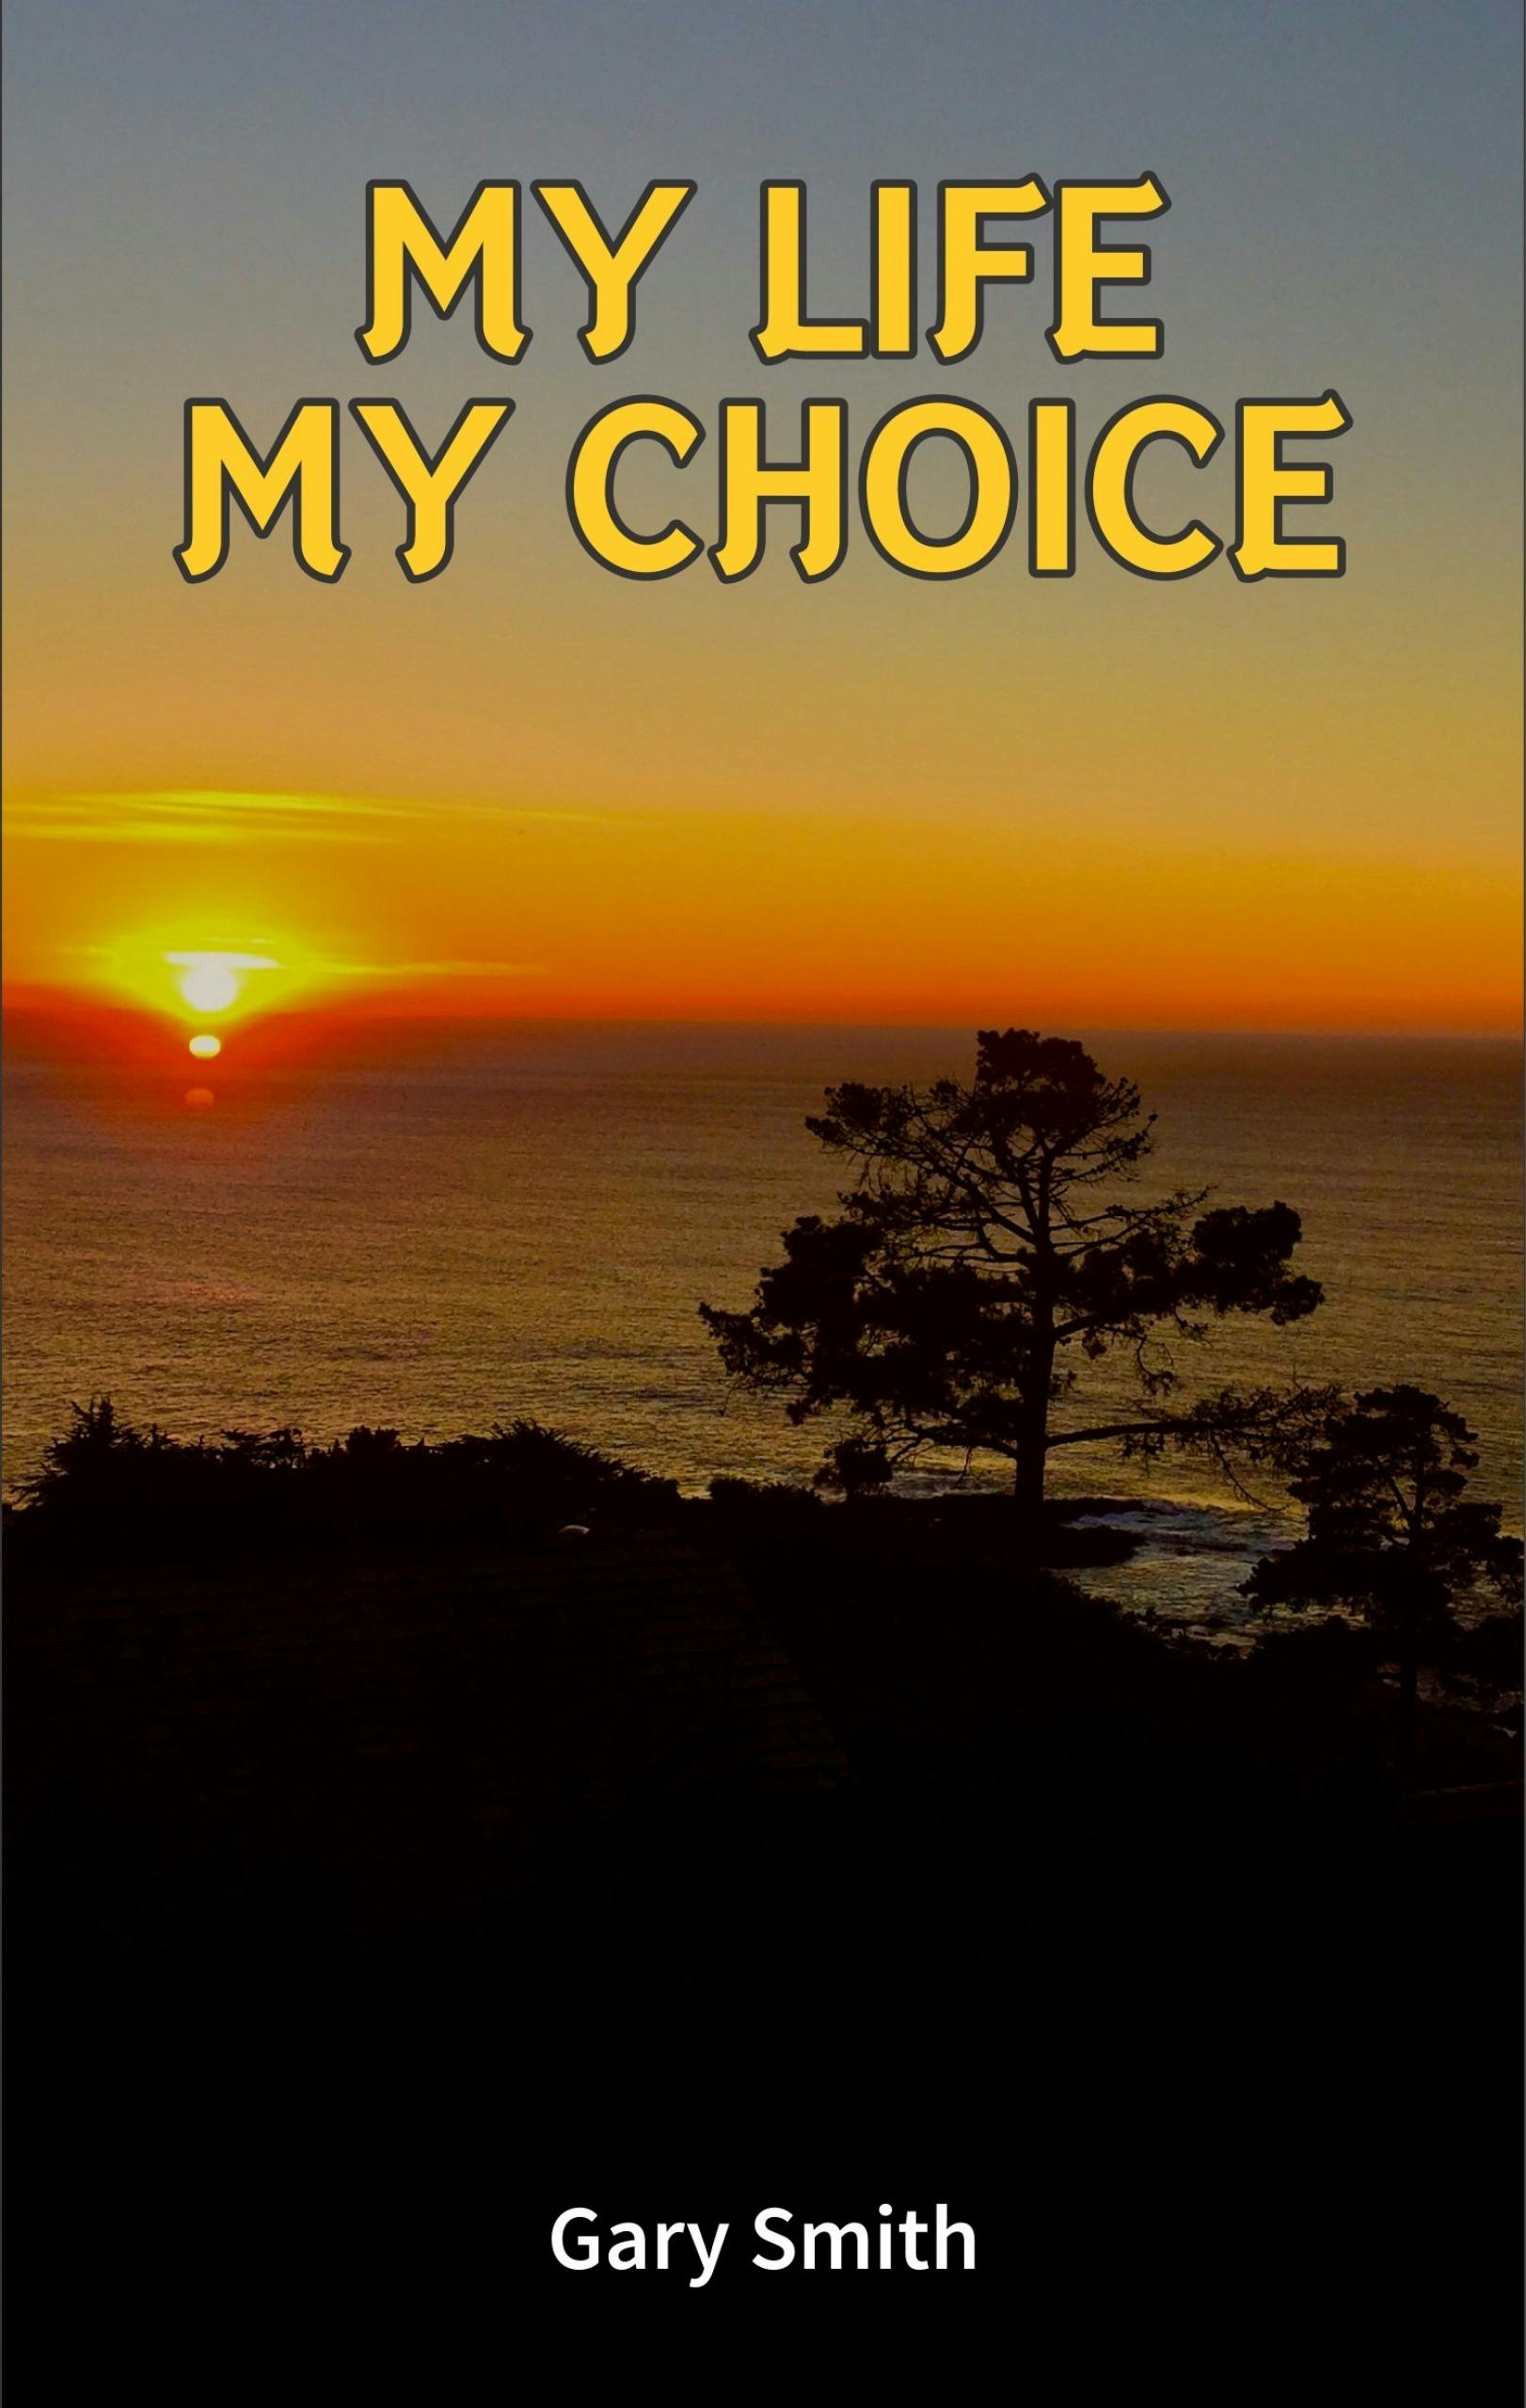 My Life My Choice, E-book, Gary Smith